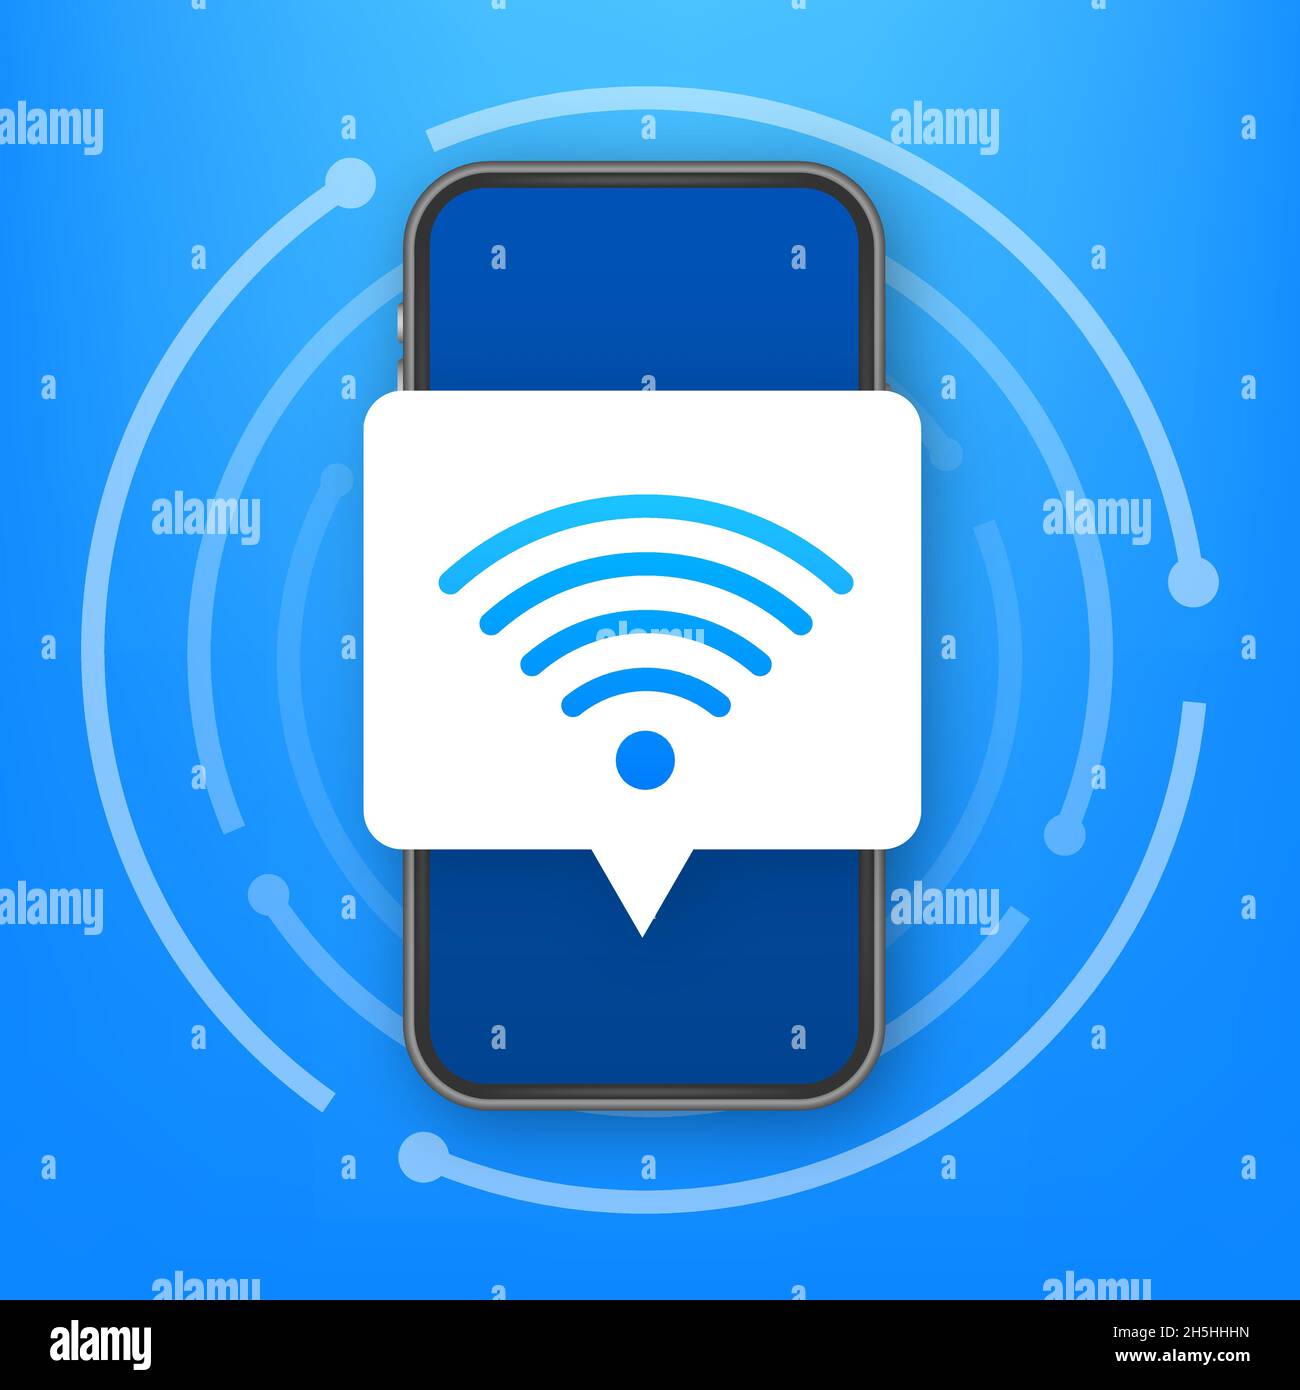 Wireless-Technologie. WiFi-Internetverbindung auf dem Smartphone-Bildschirm. Vektorgrafik. Stock Vektor